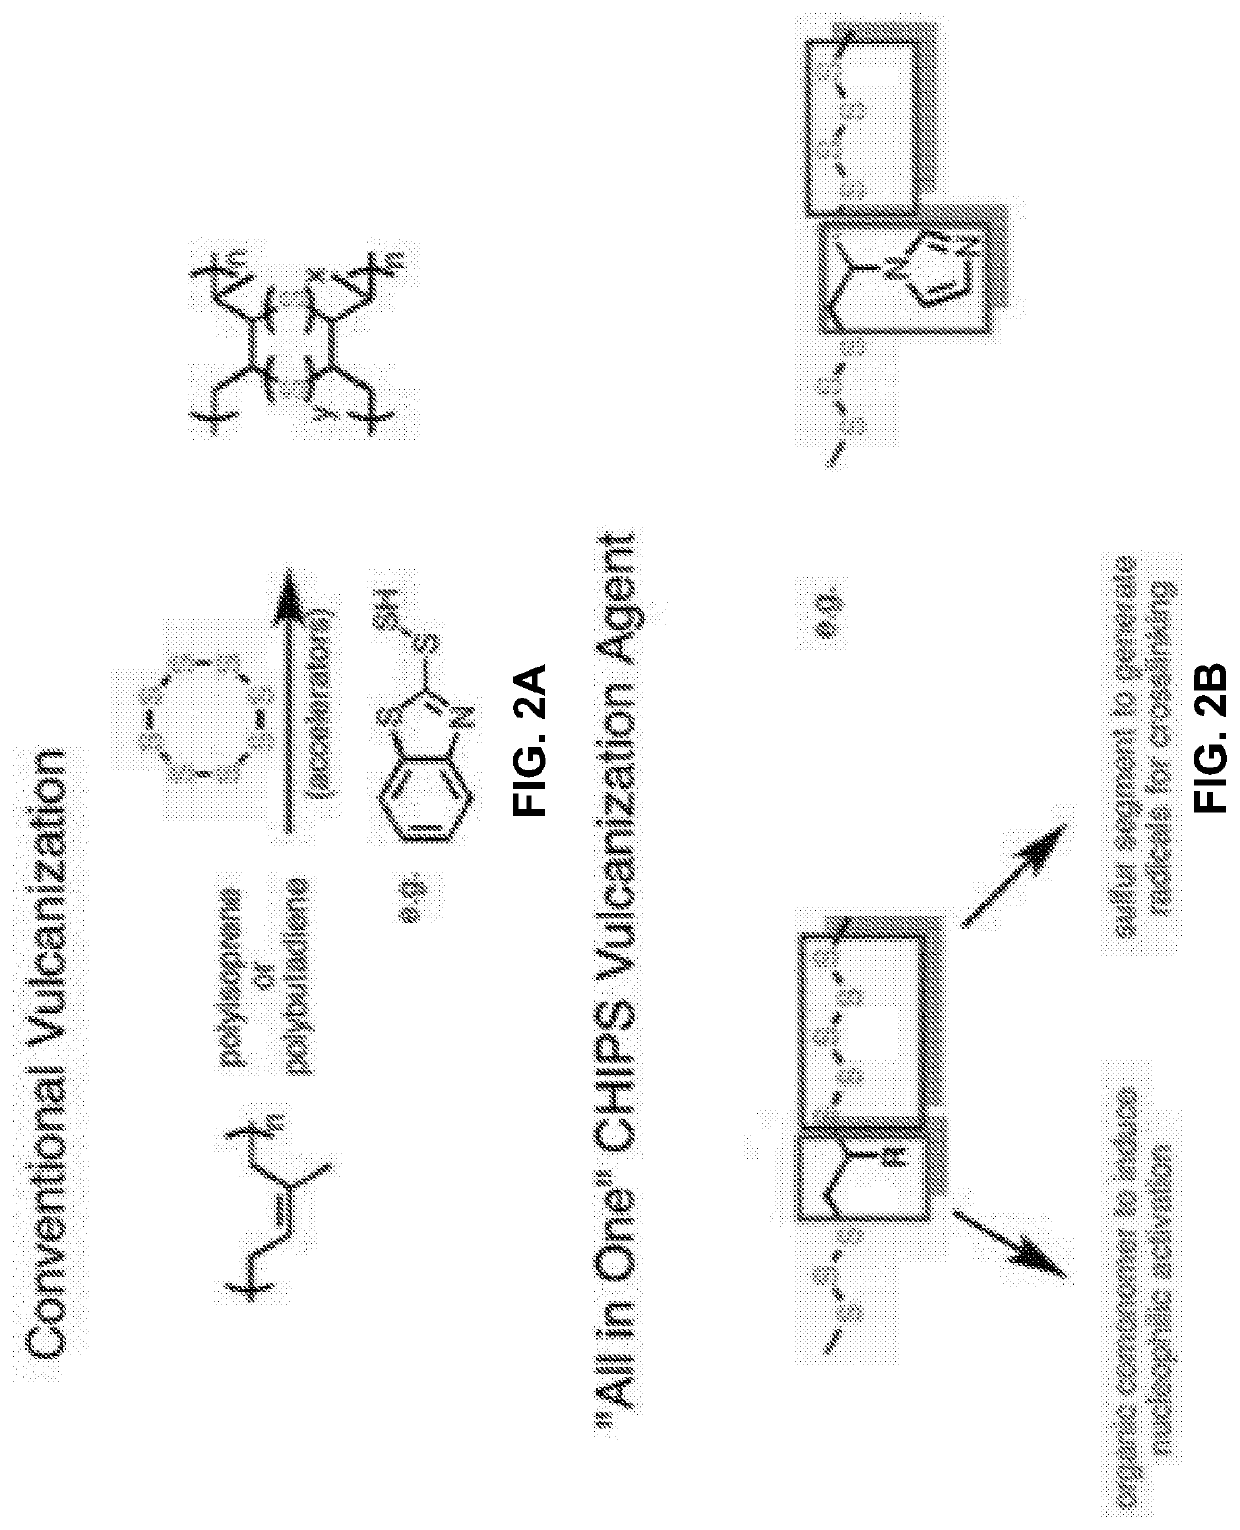 Chalcogenide hybrid inorganic/organic polymer (CHIP) materials as improved crosslinking agents for vulcanization